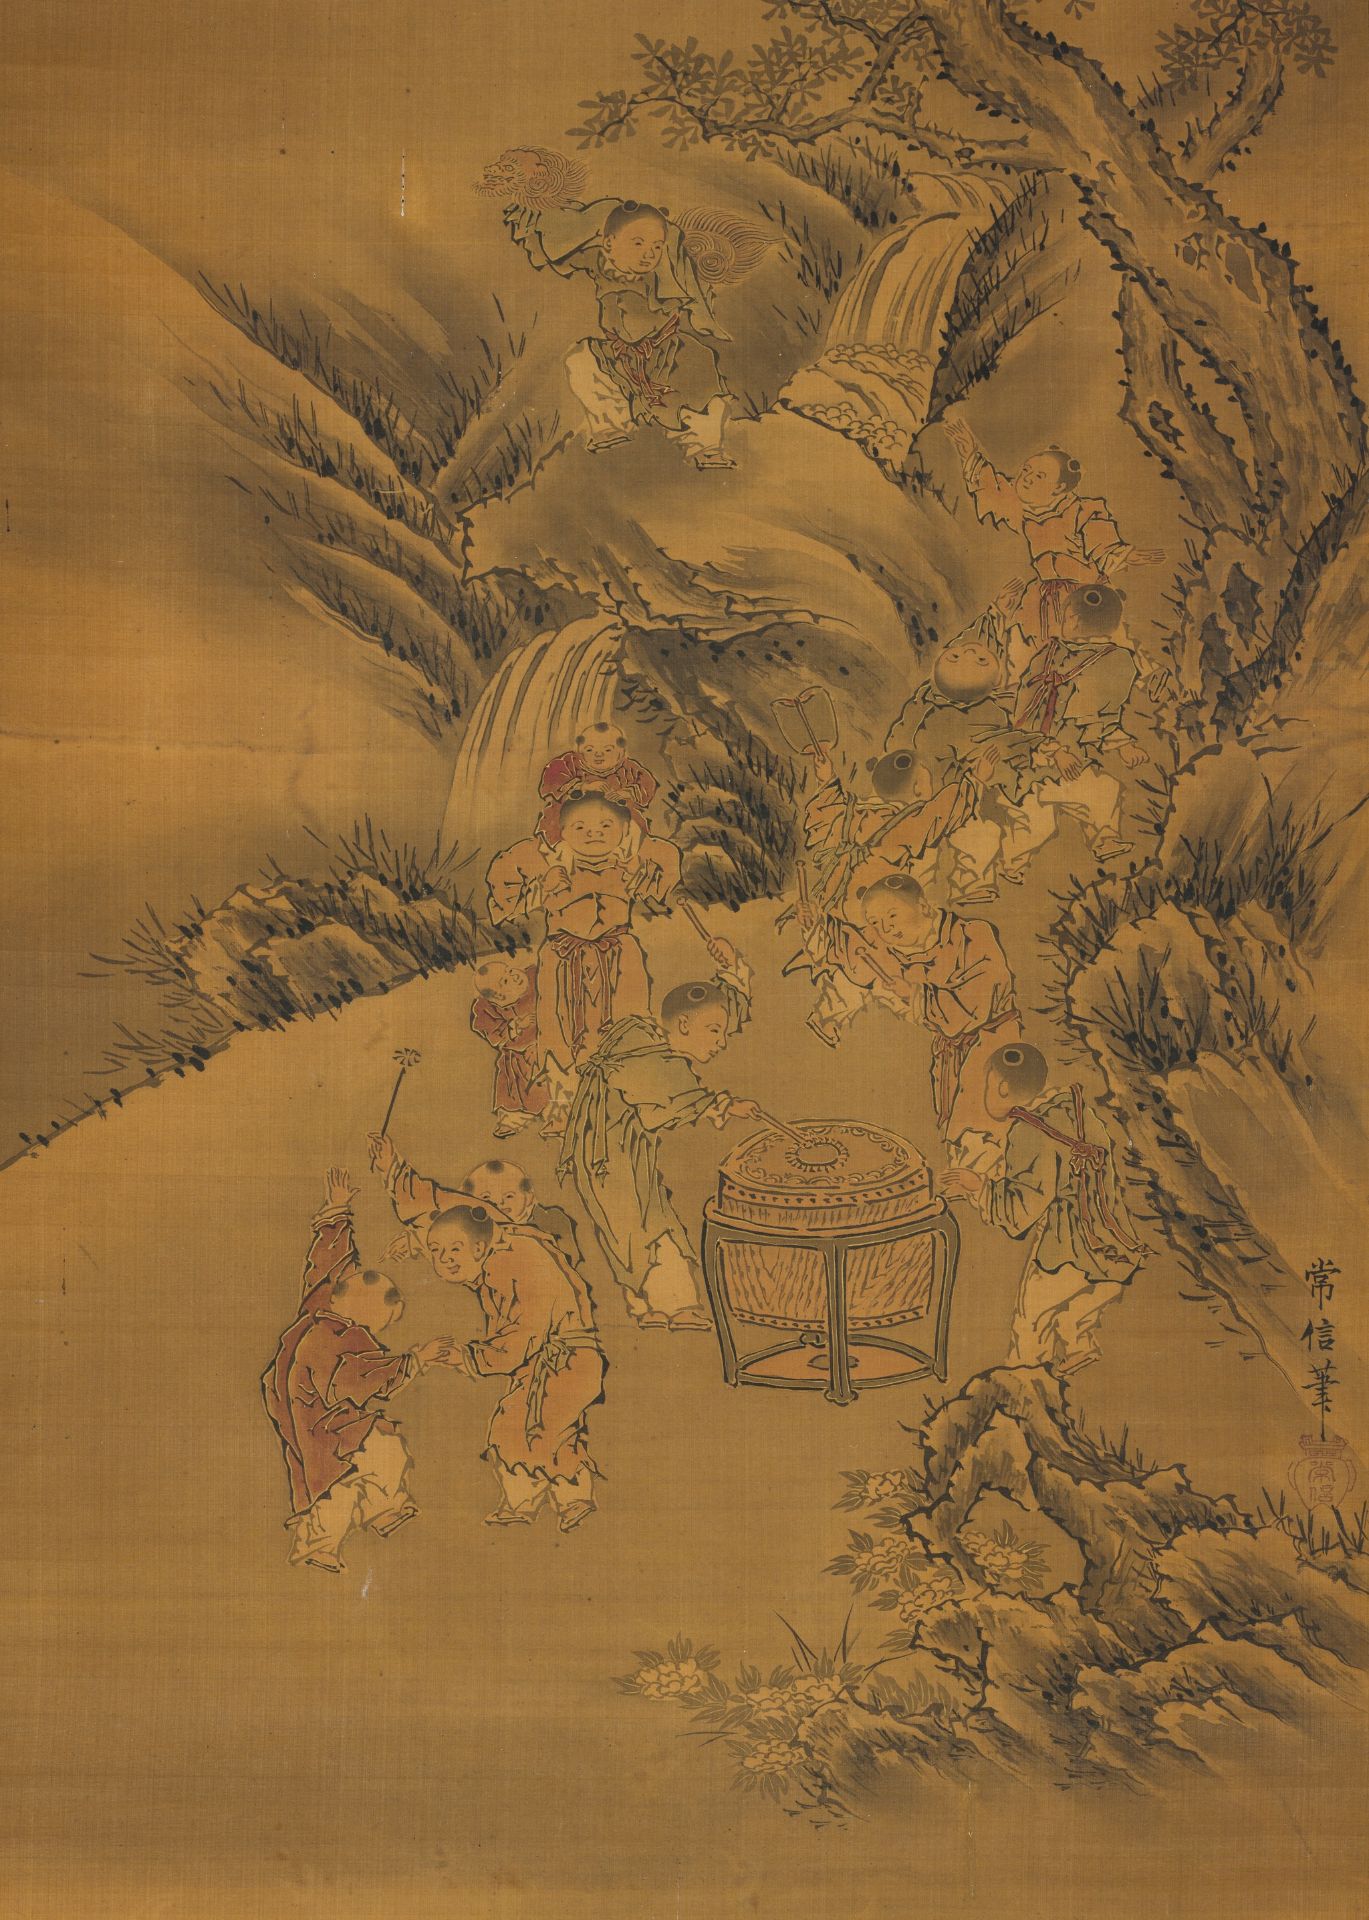 KANO TSUNENOBU (1636-1713): 'KARAKO BOYS AT PLAY'